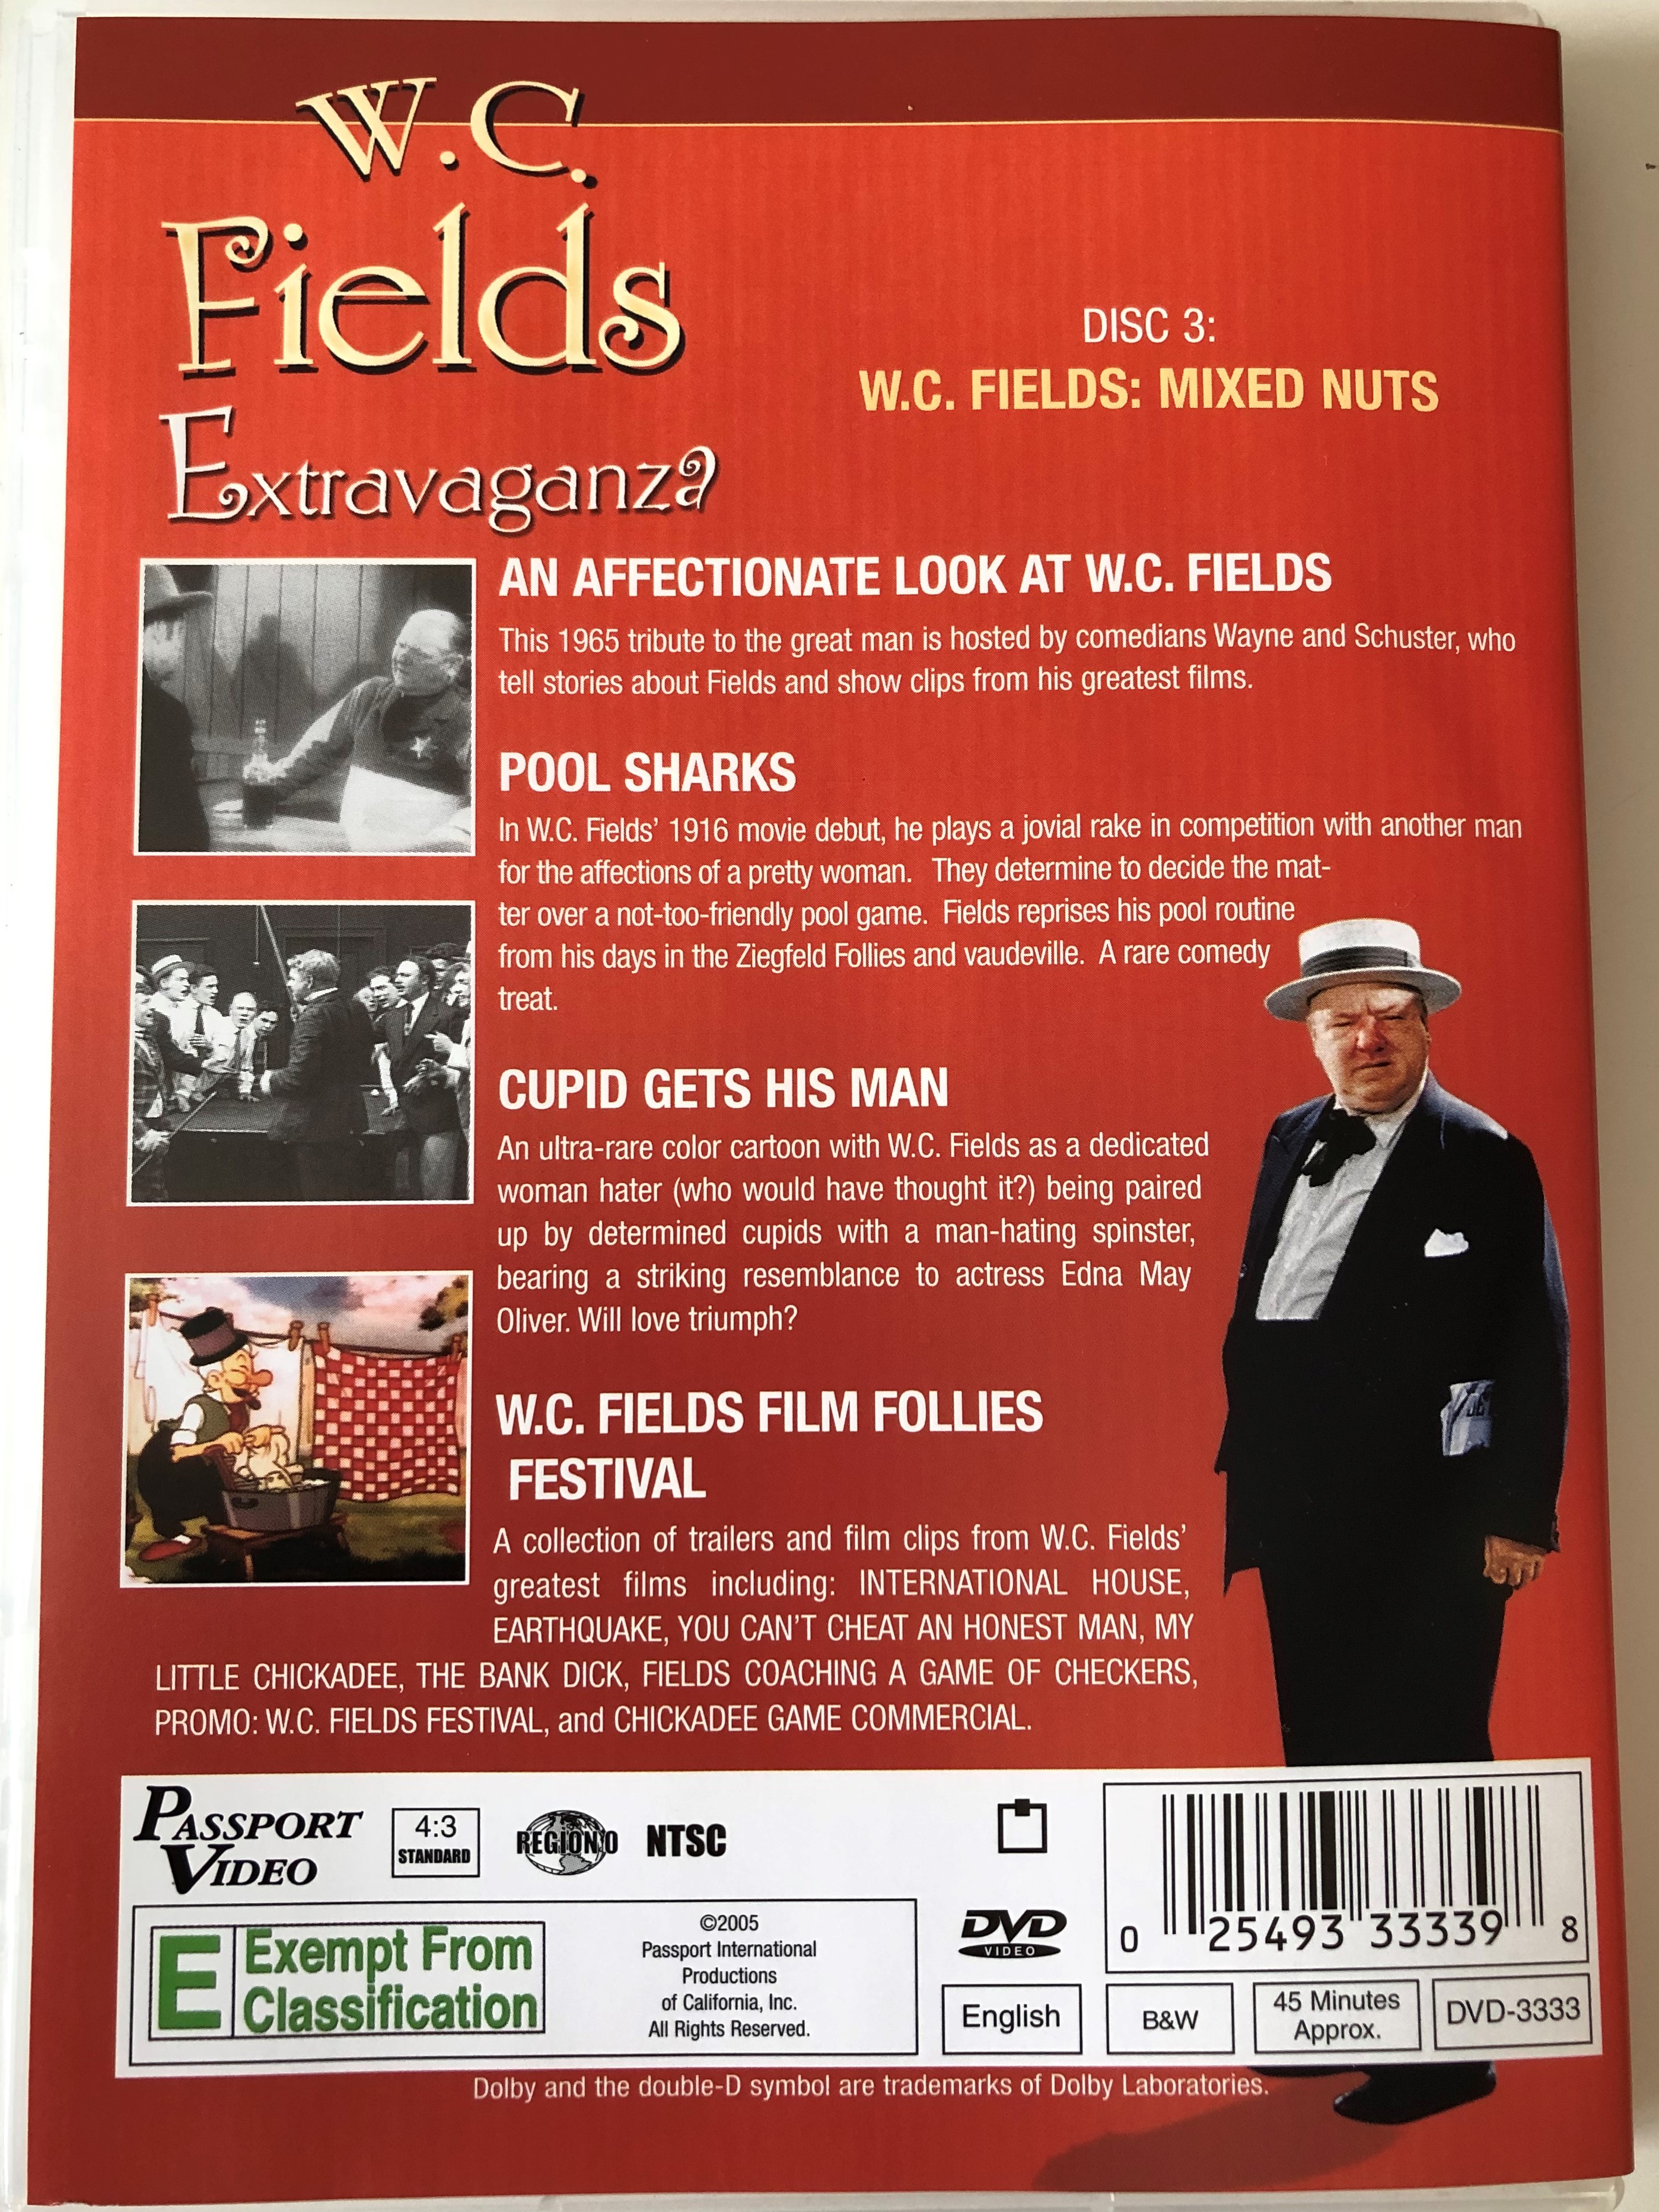 w.c.-fields-extravaganza-dvd-disc-3.-mixed-nuts-2.jpg